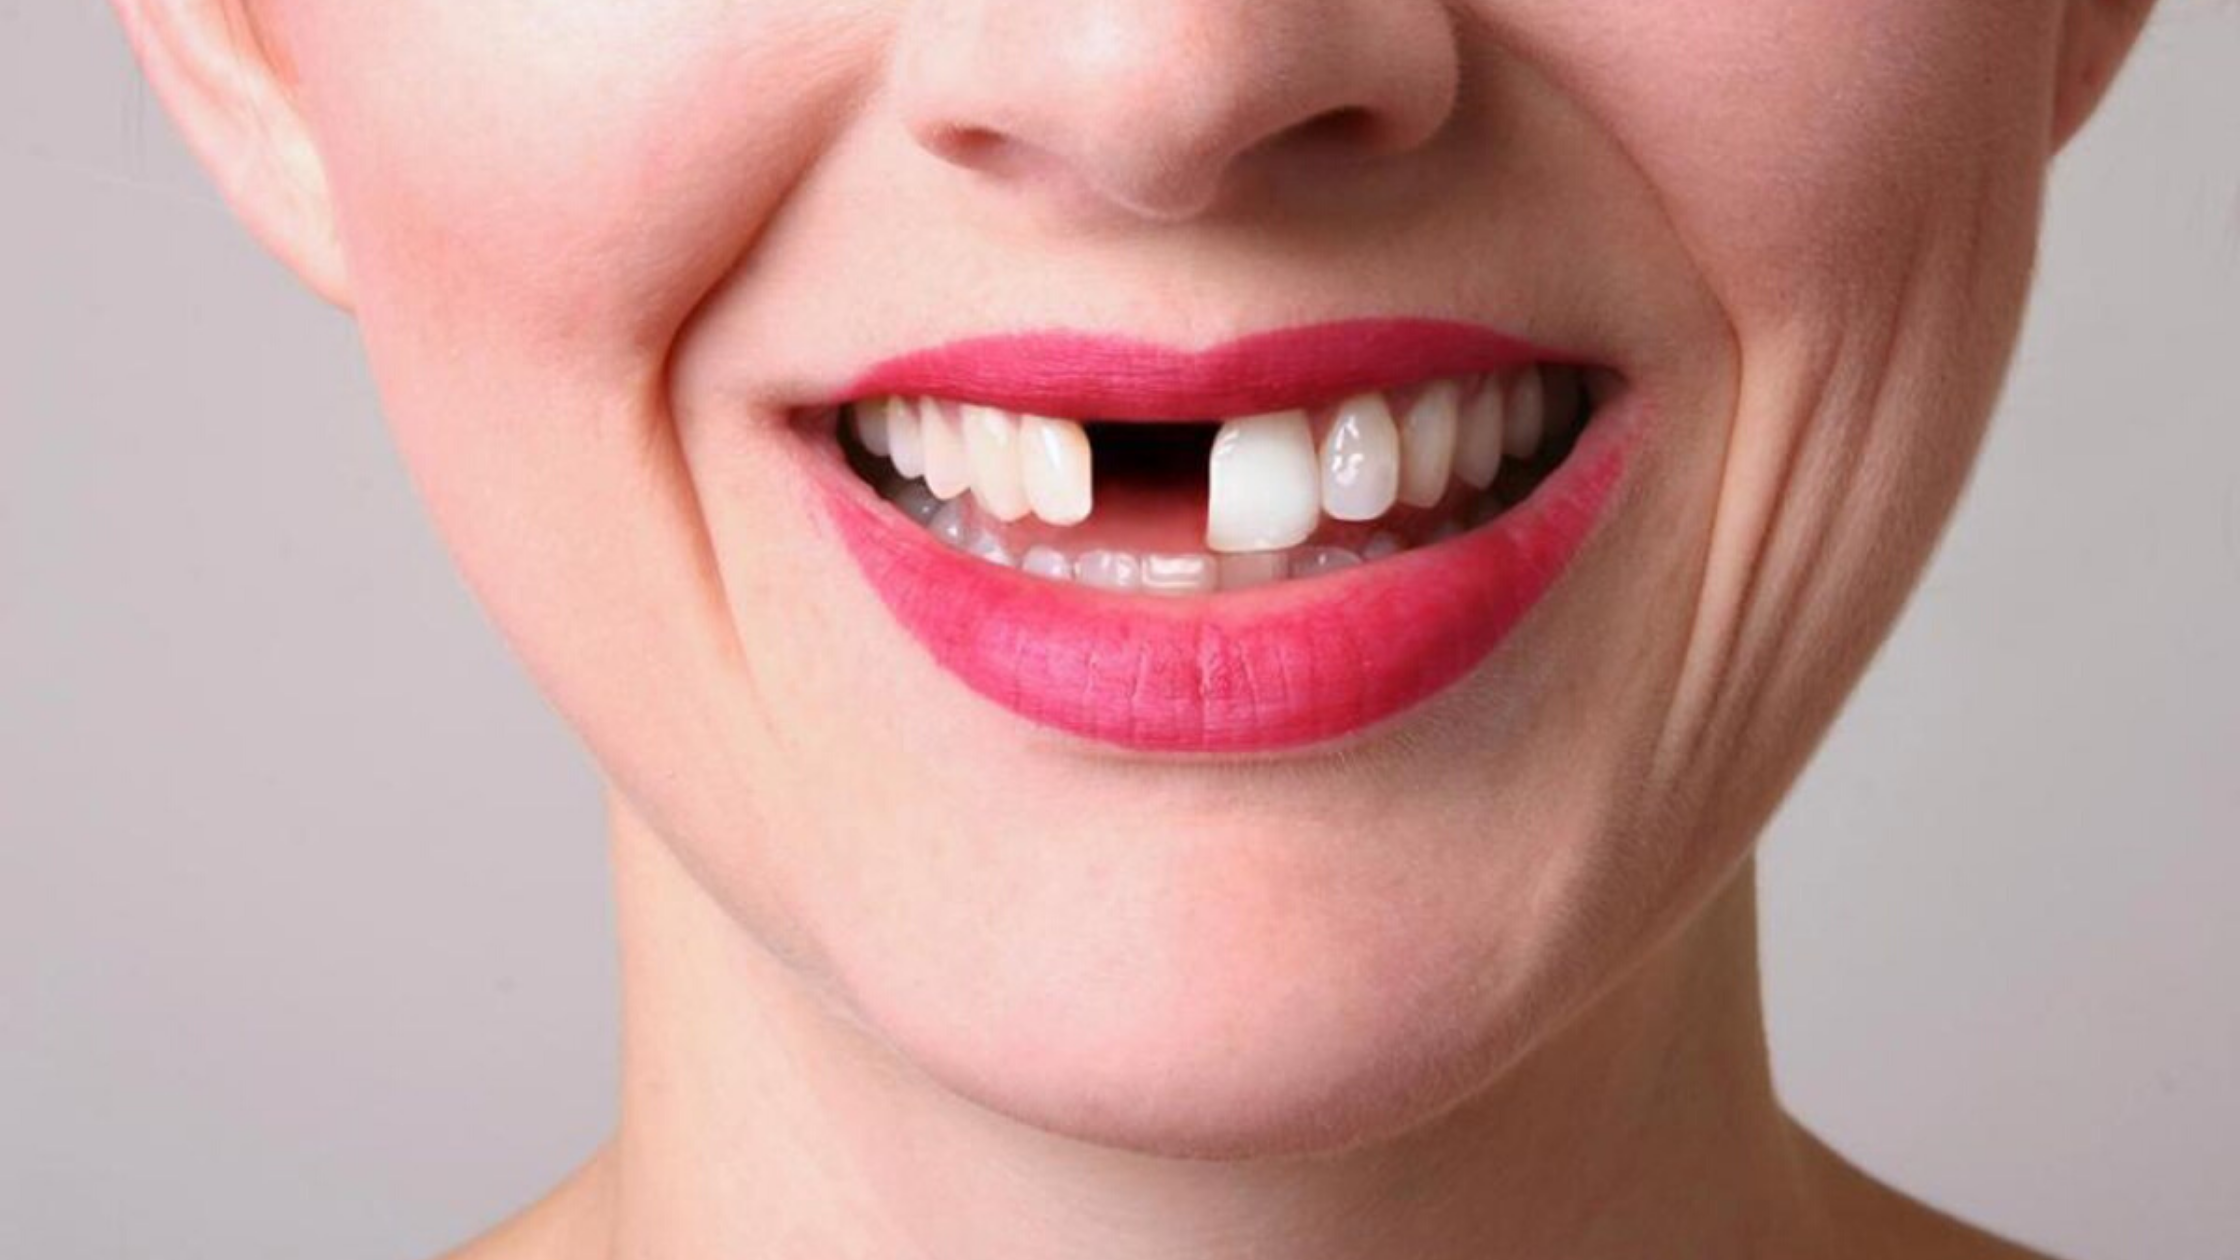 tooth loss and warning signs